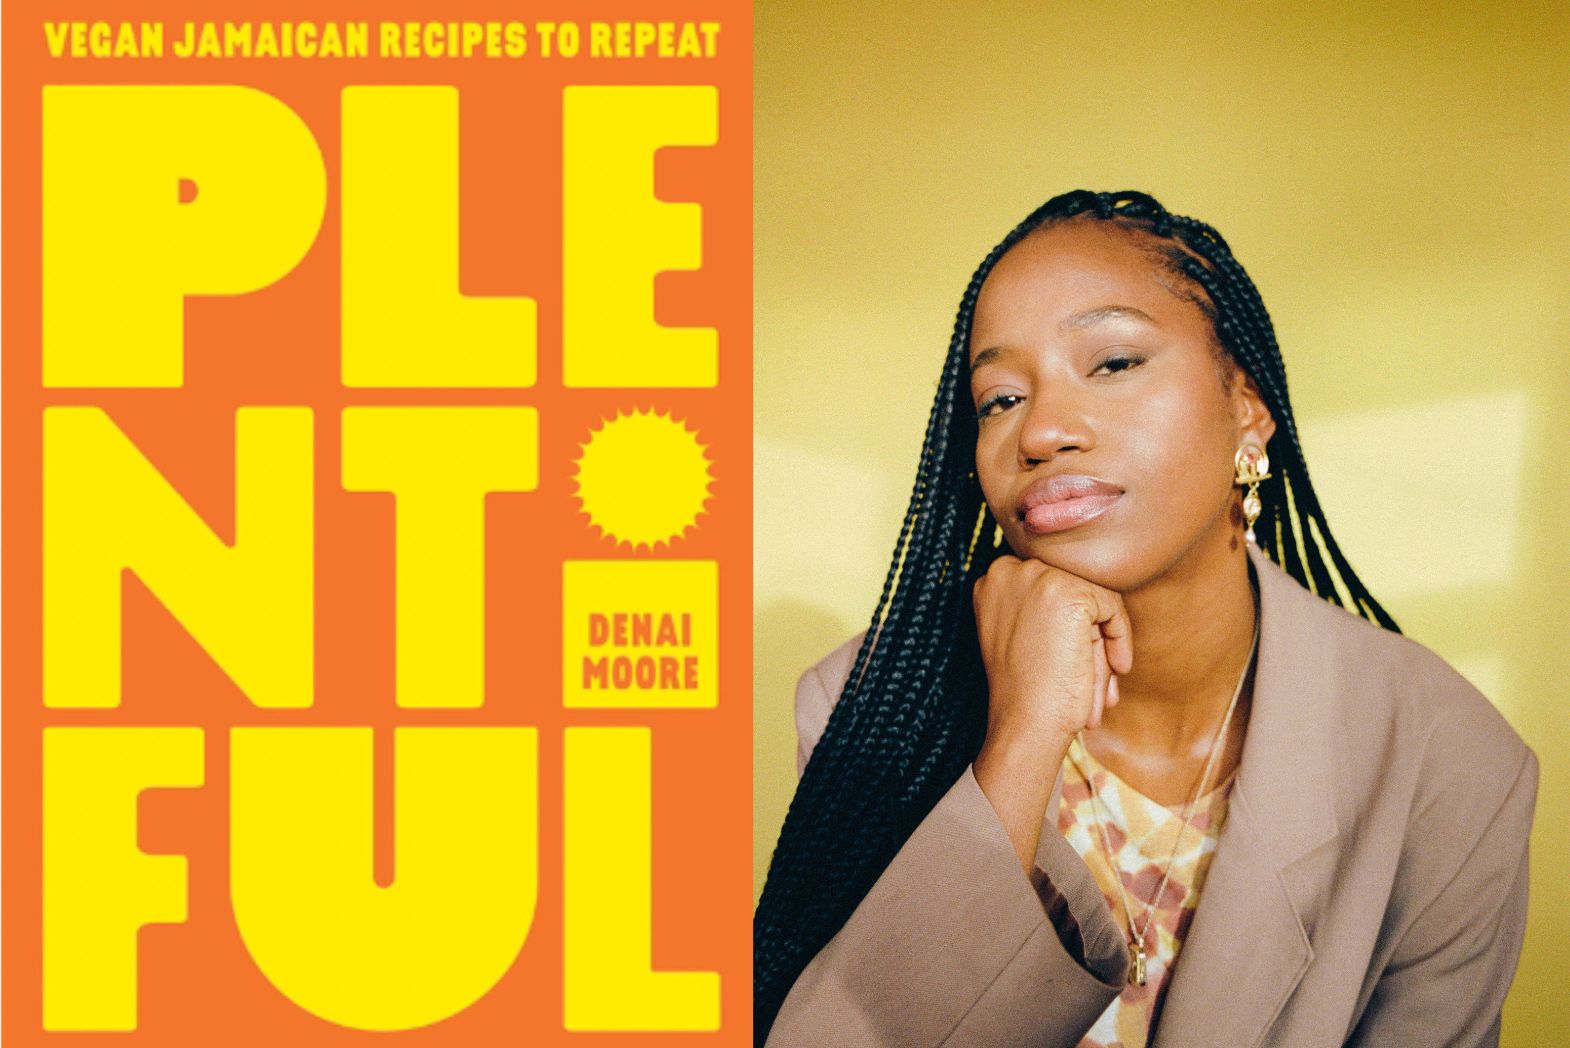 Denai Moore on the Vegan Jamaican Food She Loves